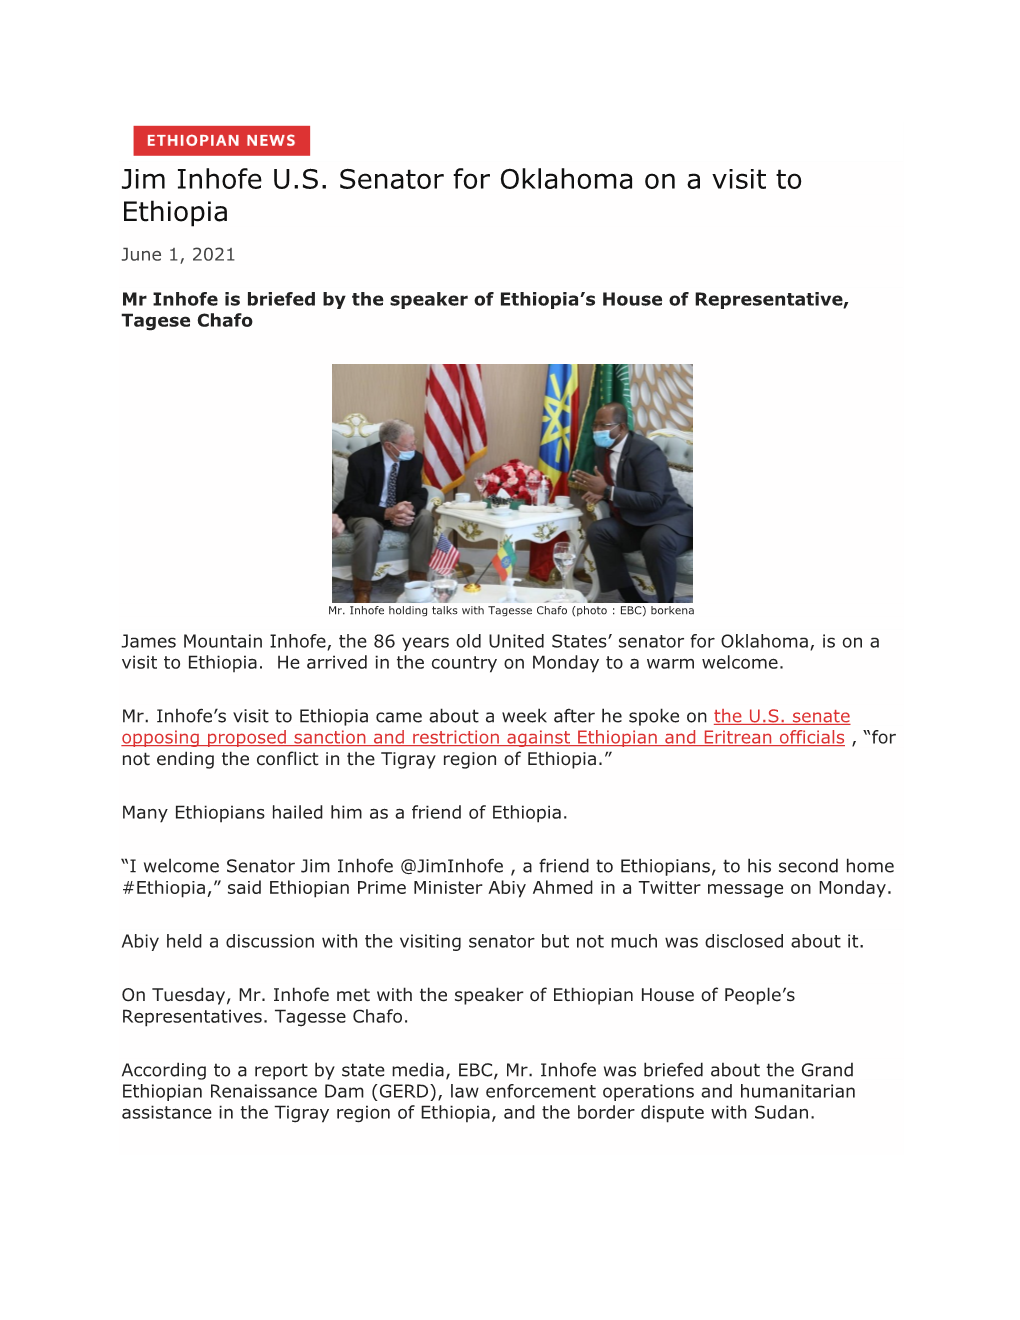 Jim Inhofe U.S. Senator for Oklahoma on a Visit to Ethiopia June 1, 2021